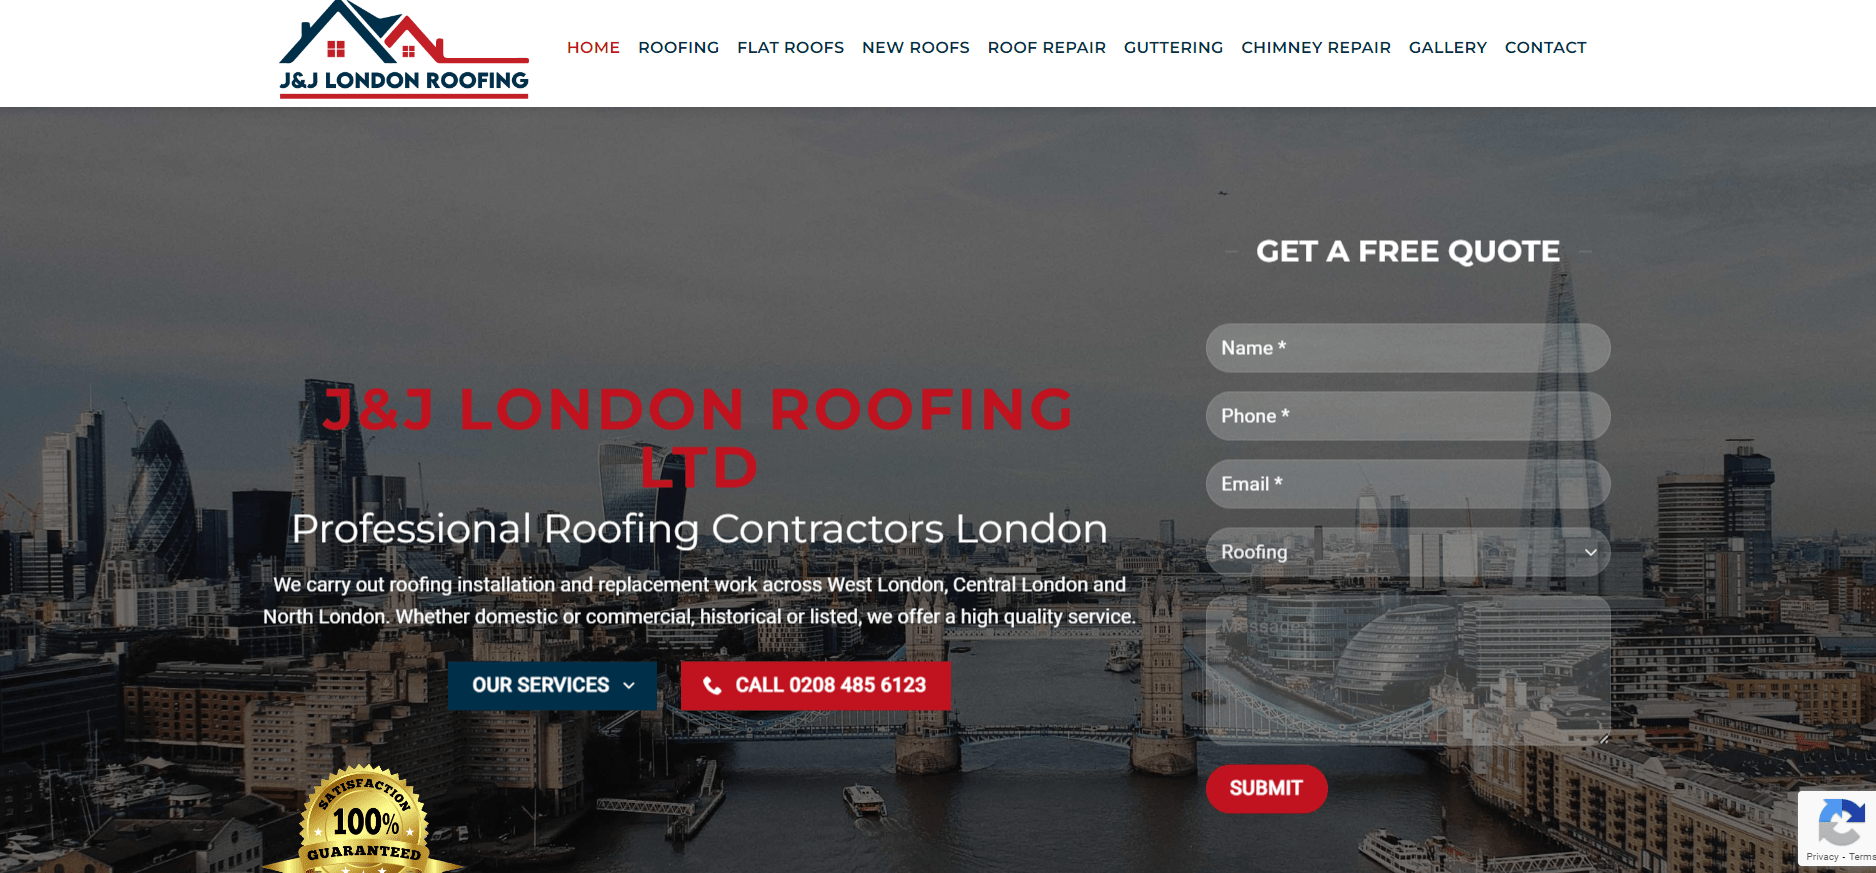 J&J London Roofing